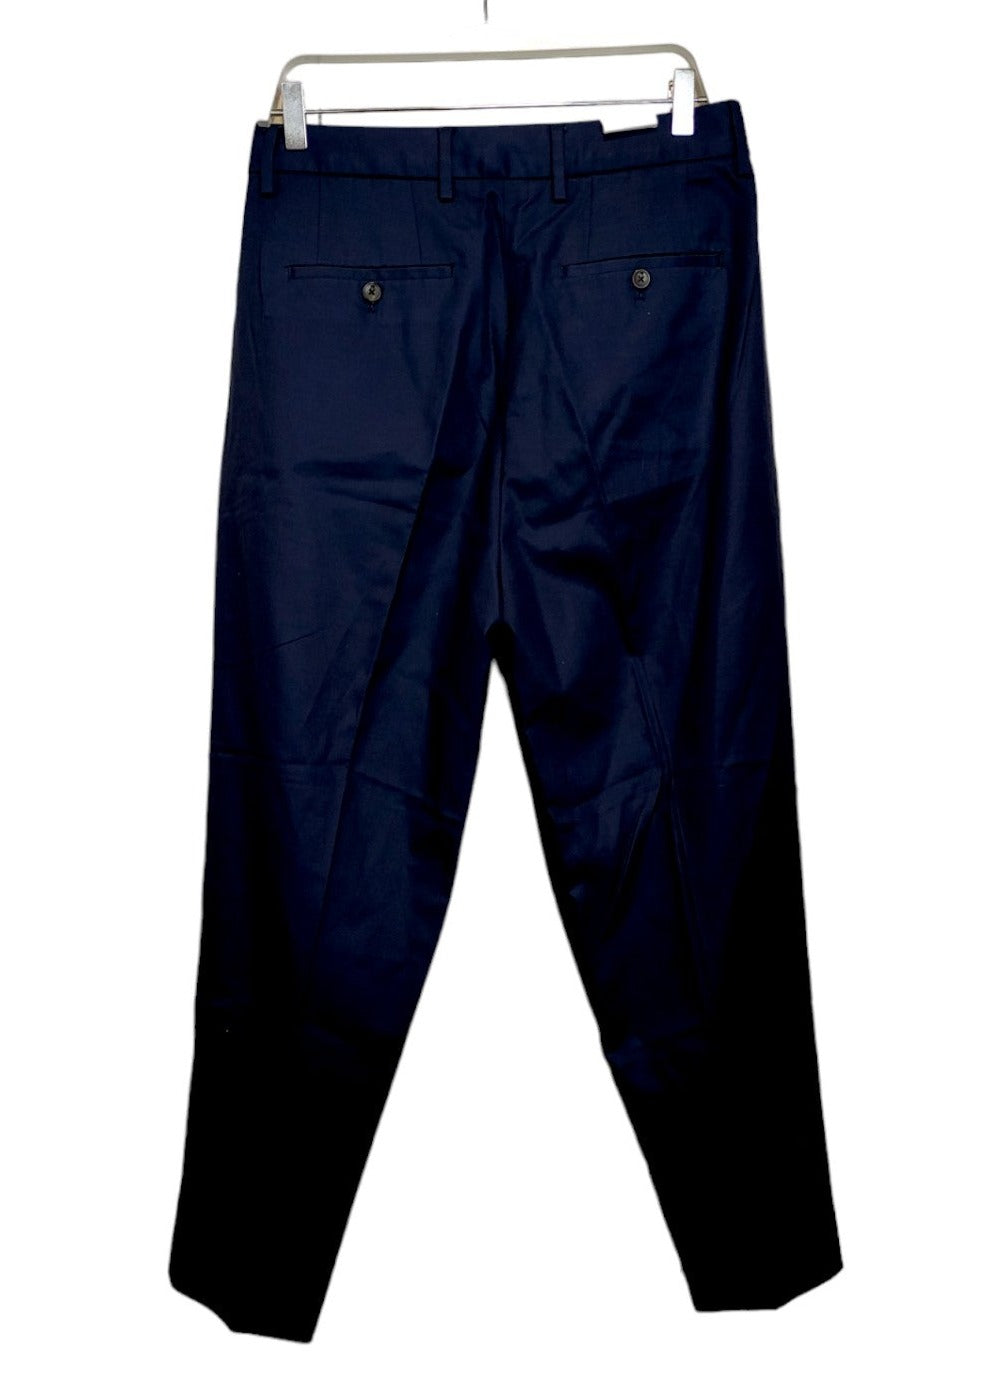 Stock, Ανδρικό Παντελόνι SCOTCH & SODA σε Σκούρο Μπλε Χρώμα (No 31)